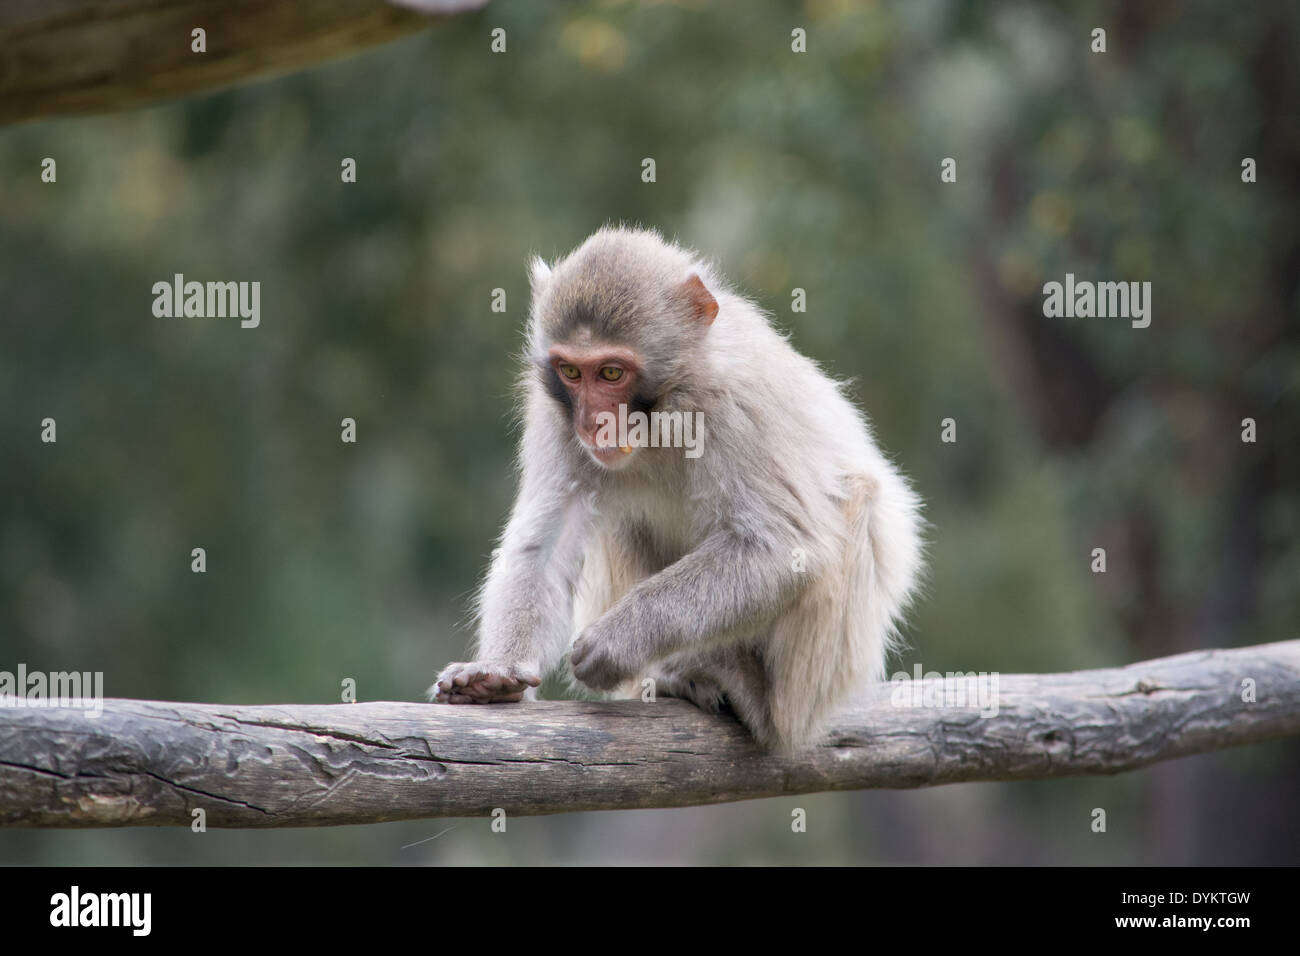 a monkey sitting down Stock Photo